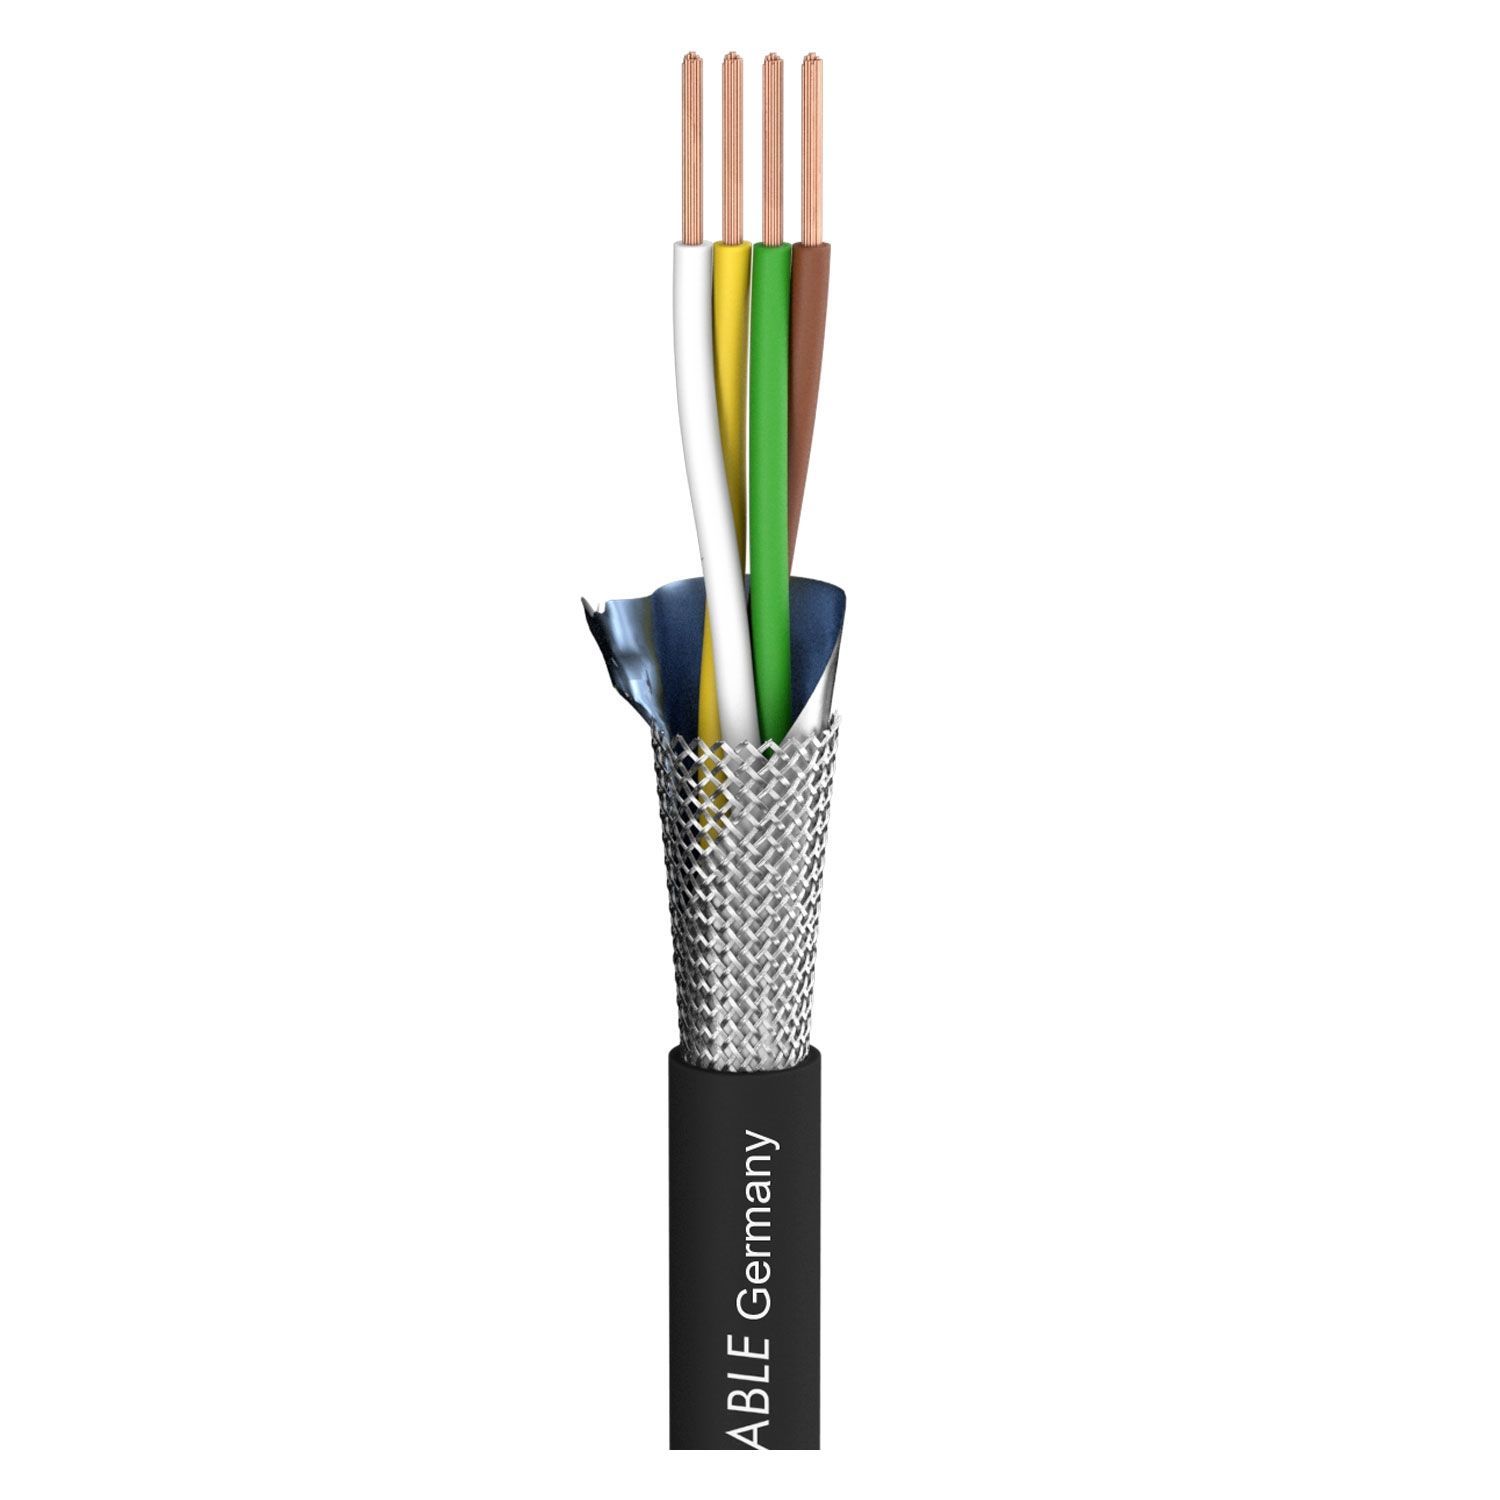 Sommer Cable Binary 434 DMX512  DMX-Kabel Meterware